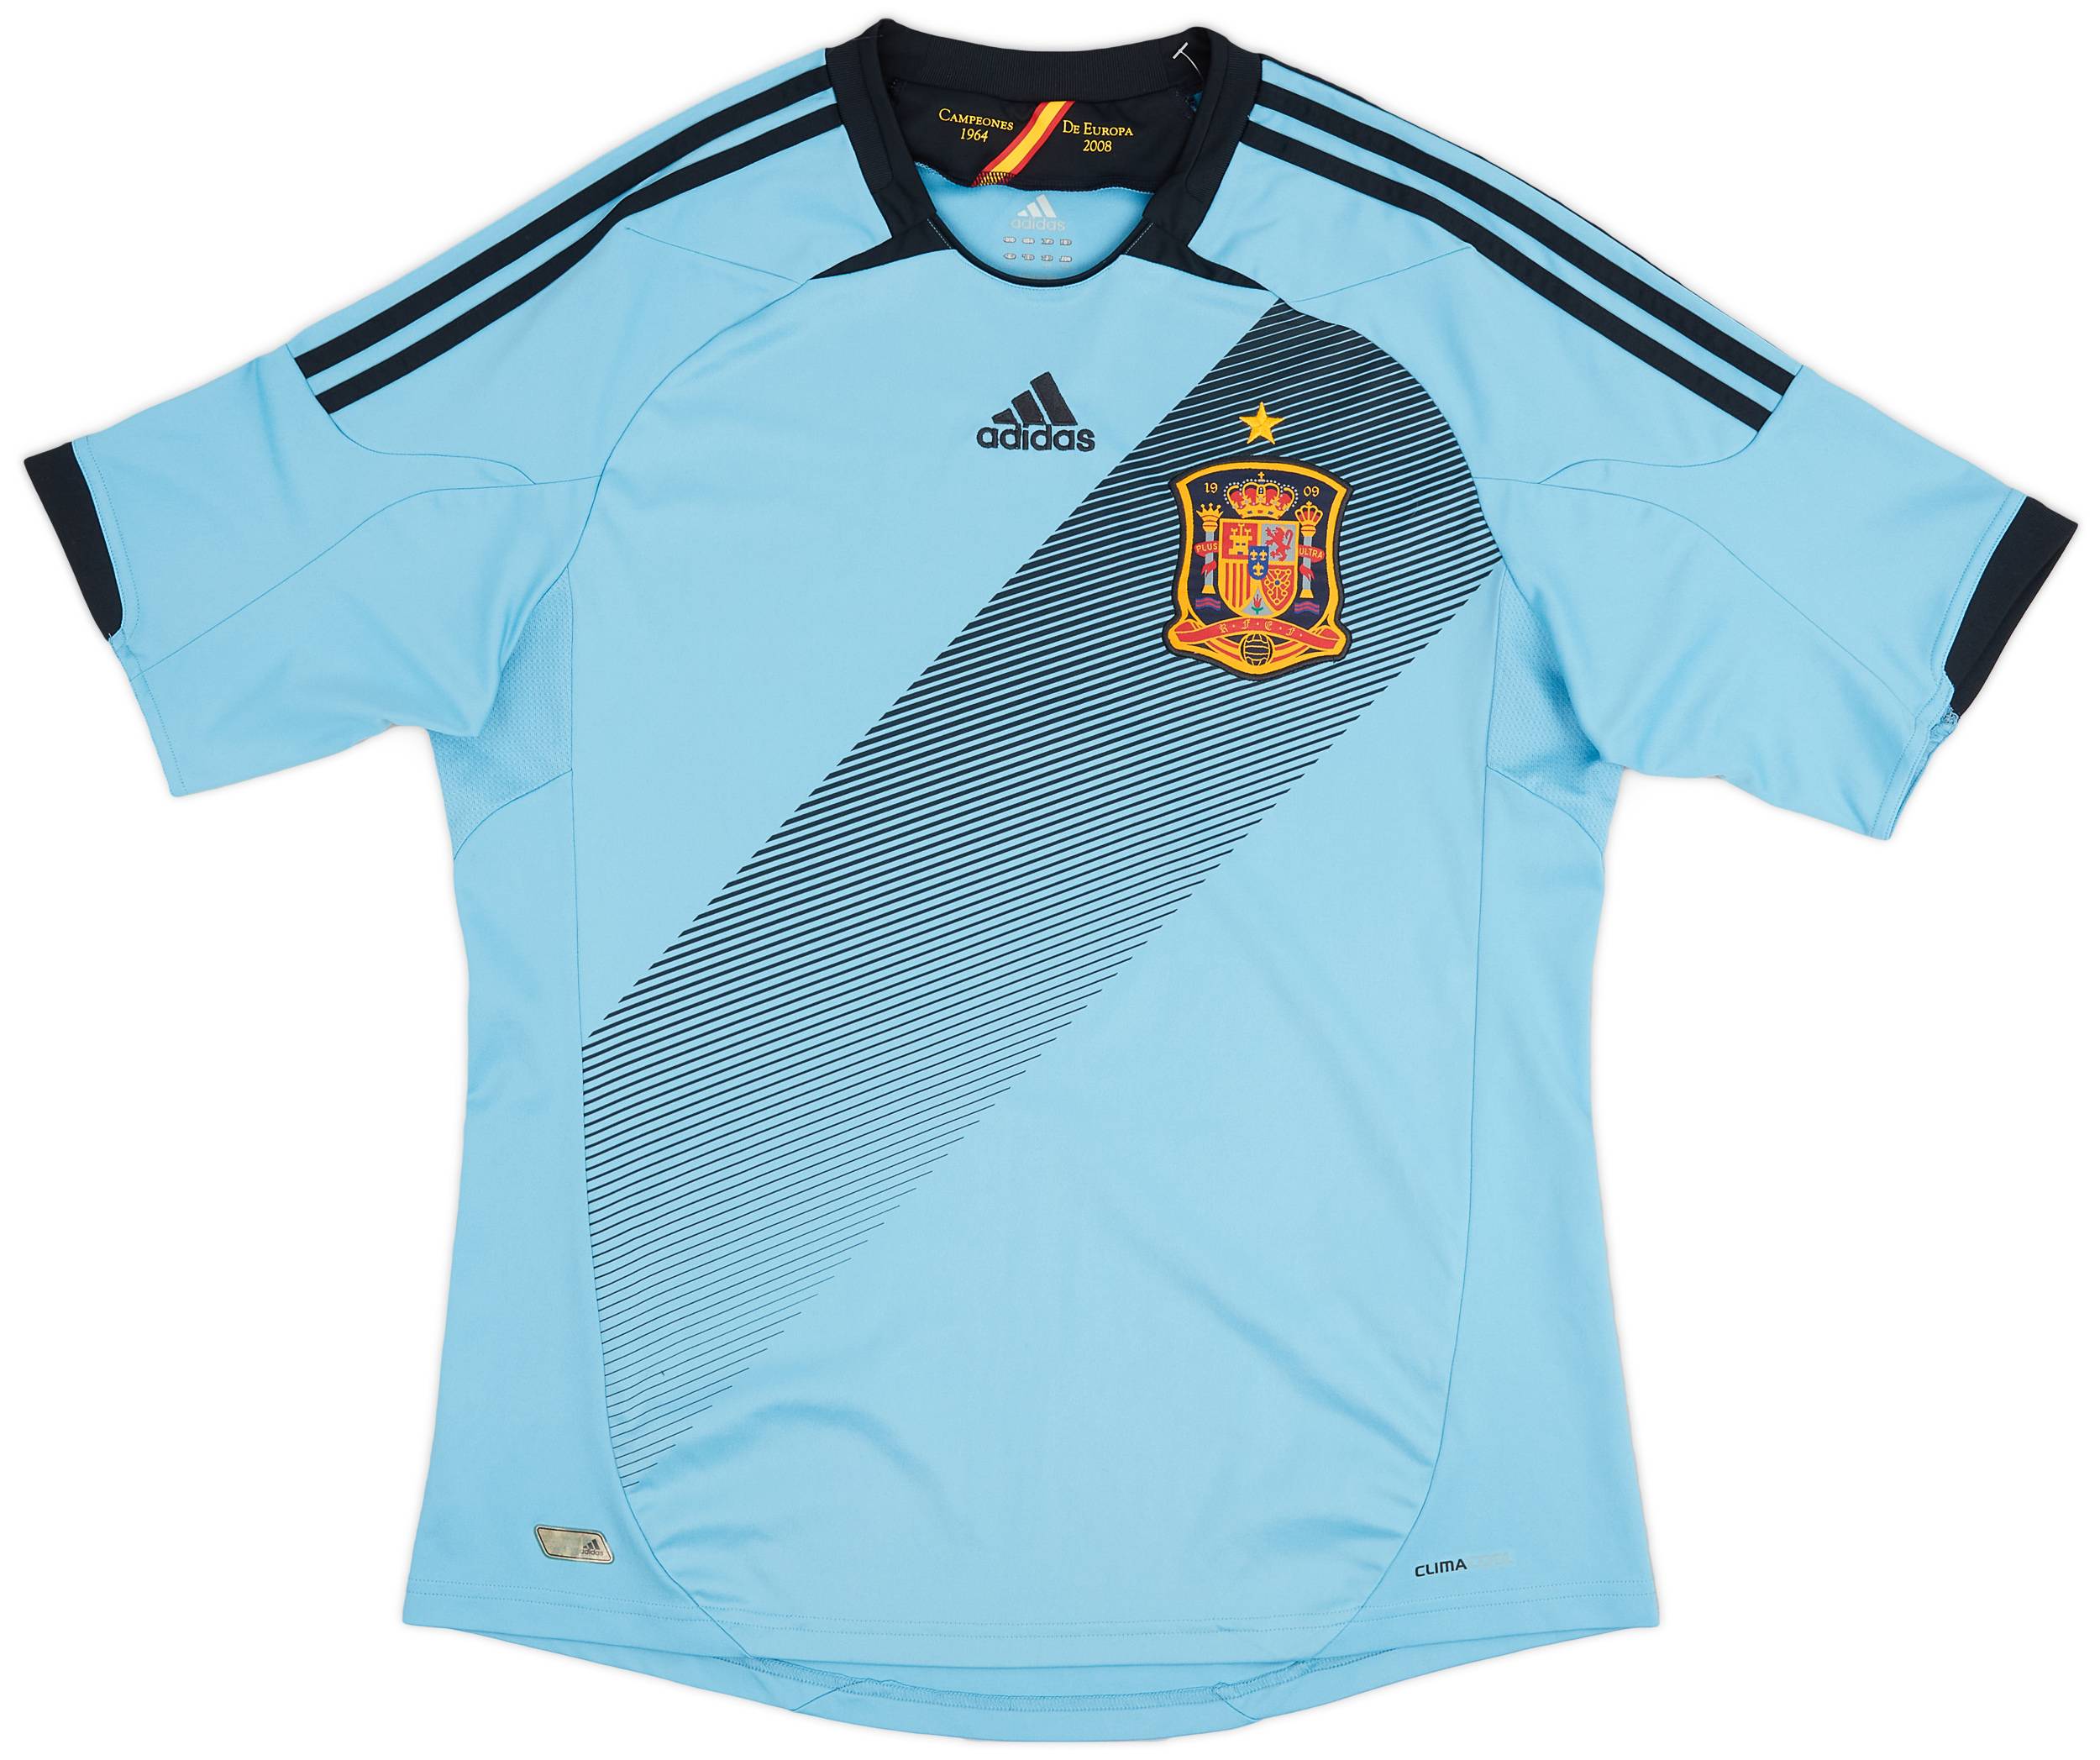 2012-14 Spain Away Shirt - 9/10 - (L)